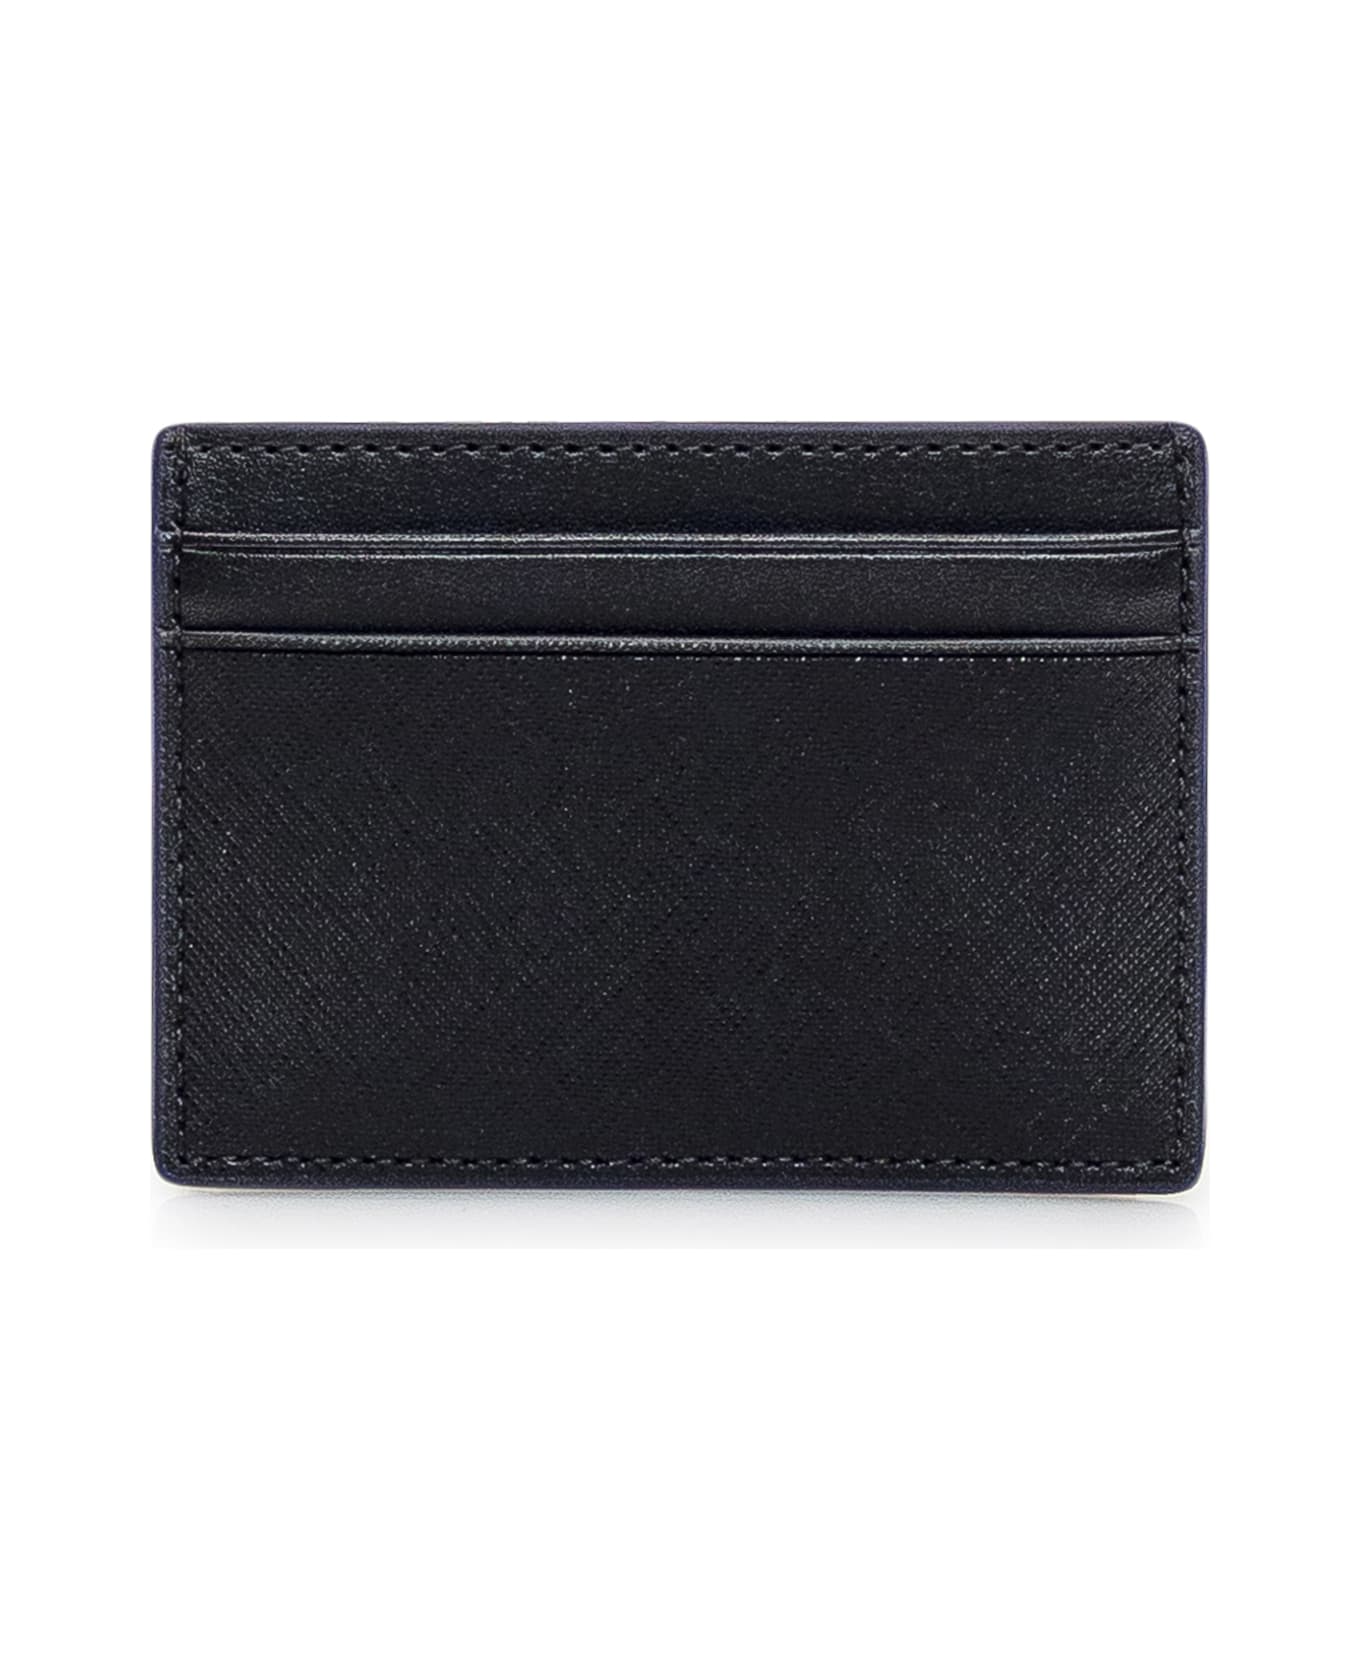 Bally Leather Card Holder - BLACK 財布